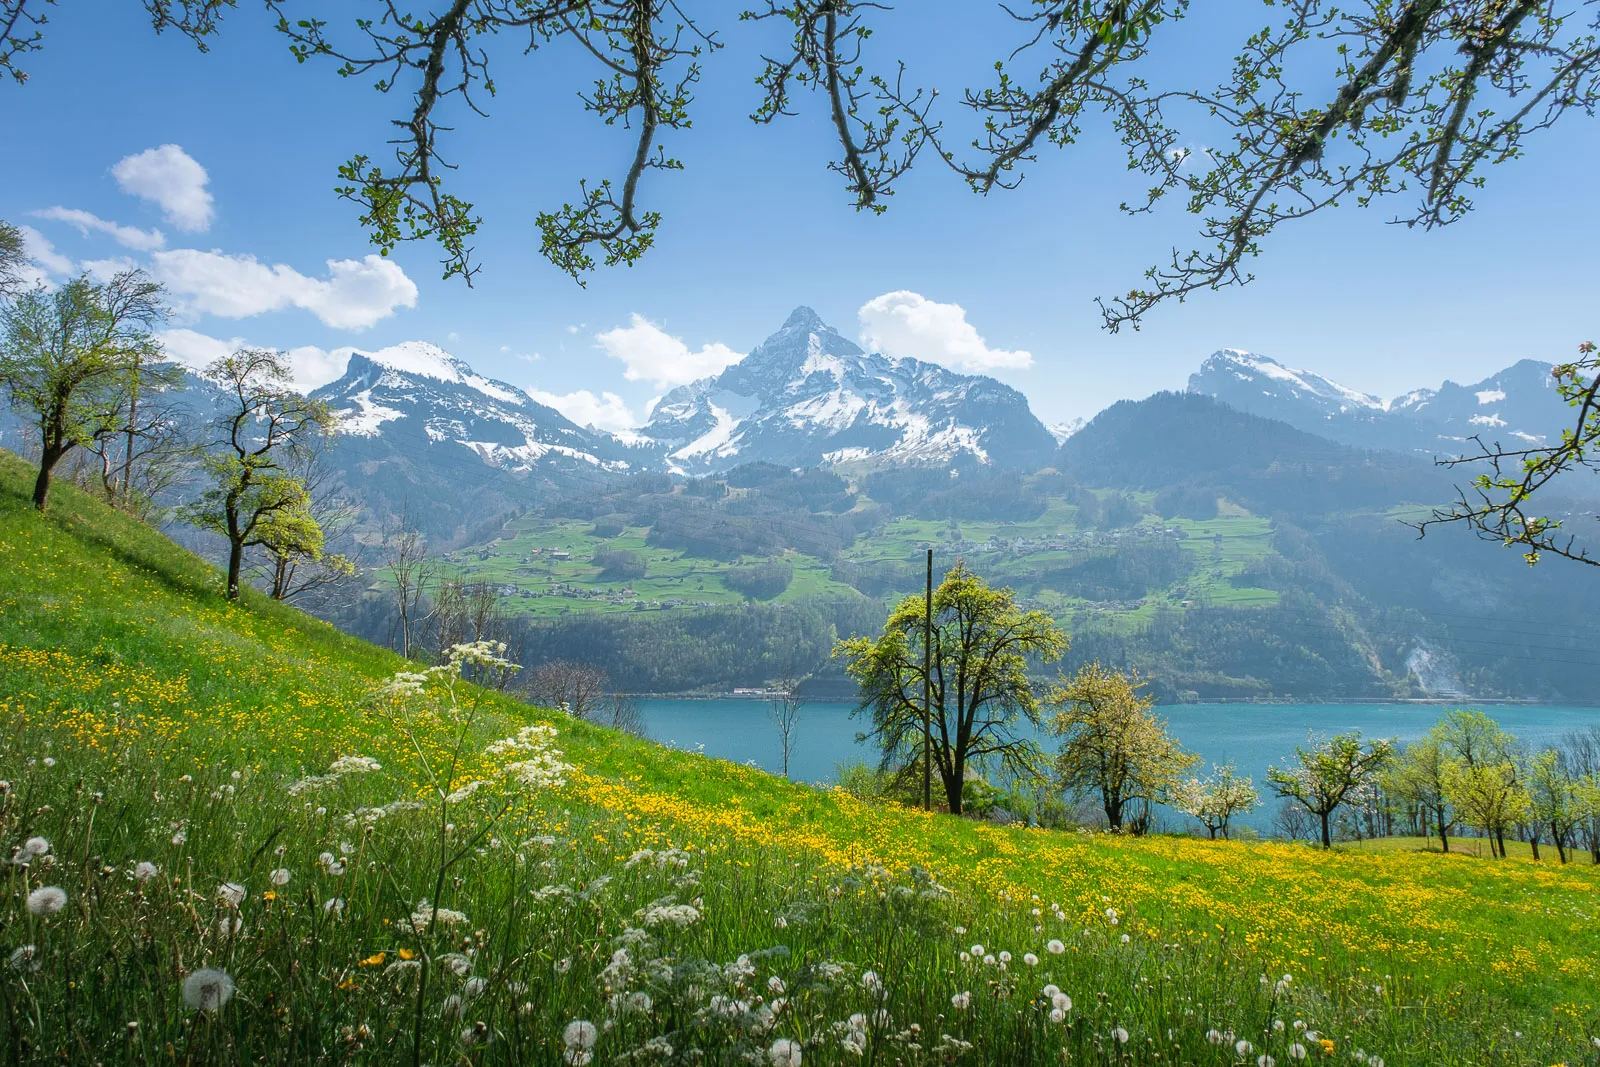 Spring in the region surrounding Walensee, Switzerland